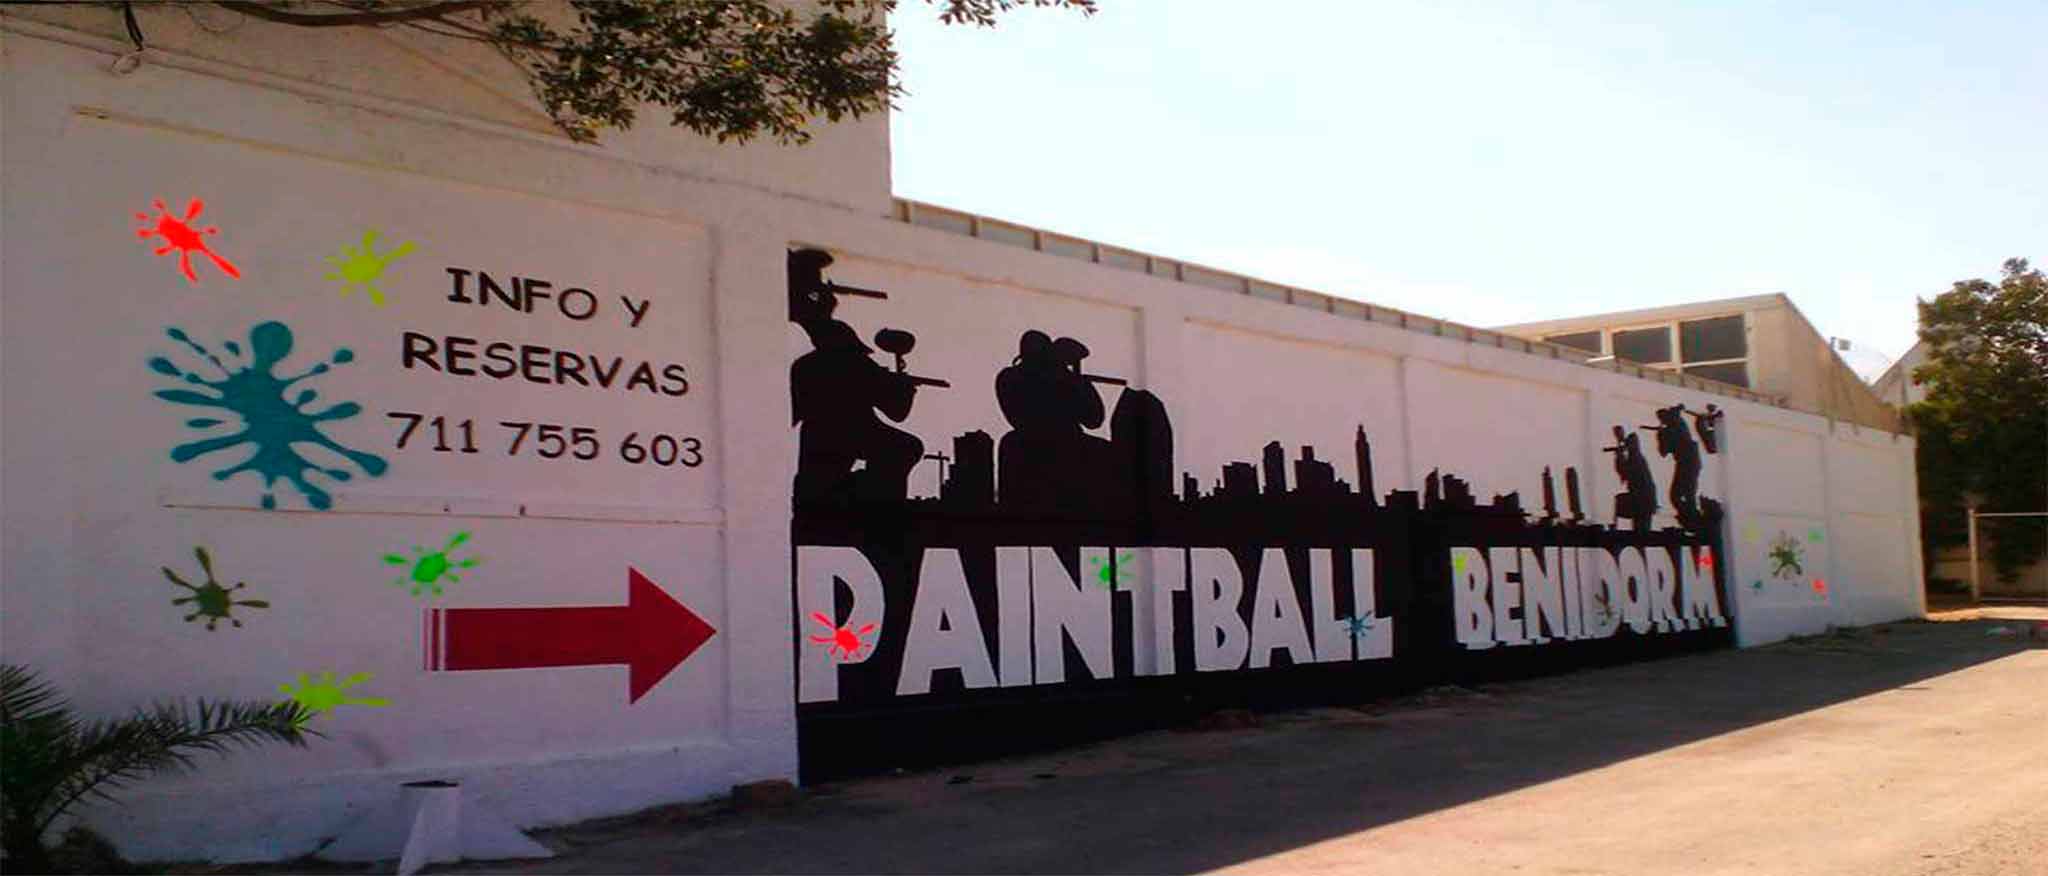 Paintball Benidorm